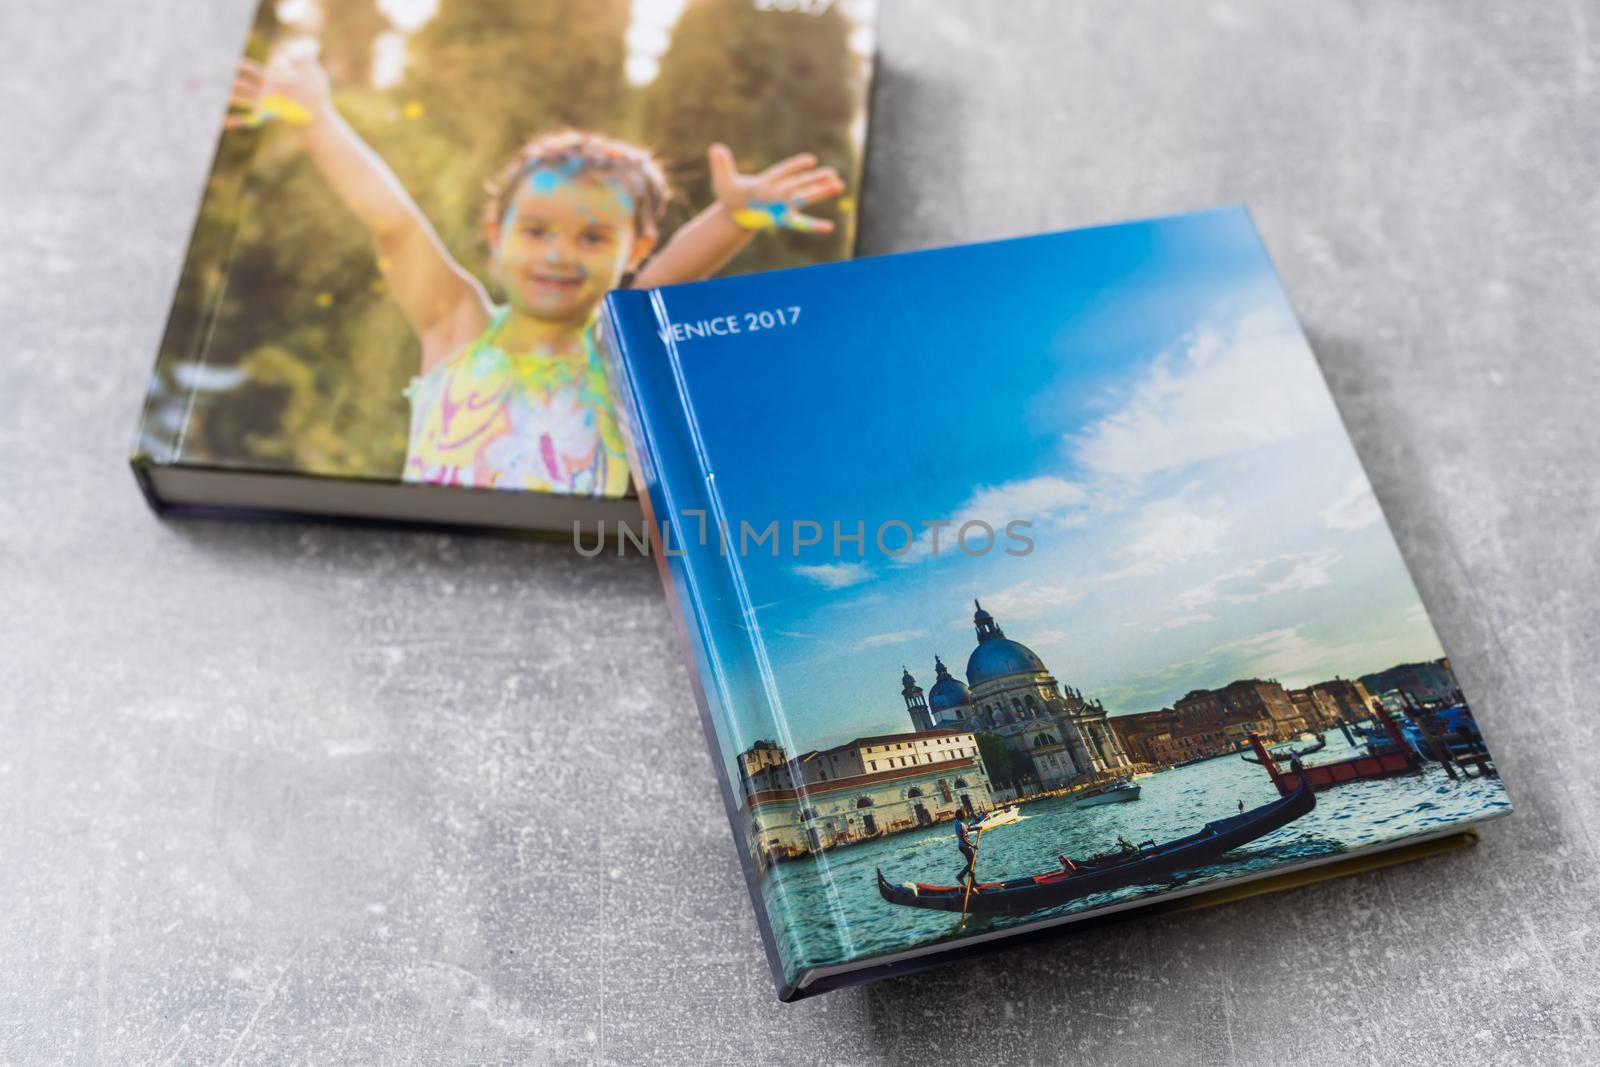 Photobook Album with Travel Photo on Table.